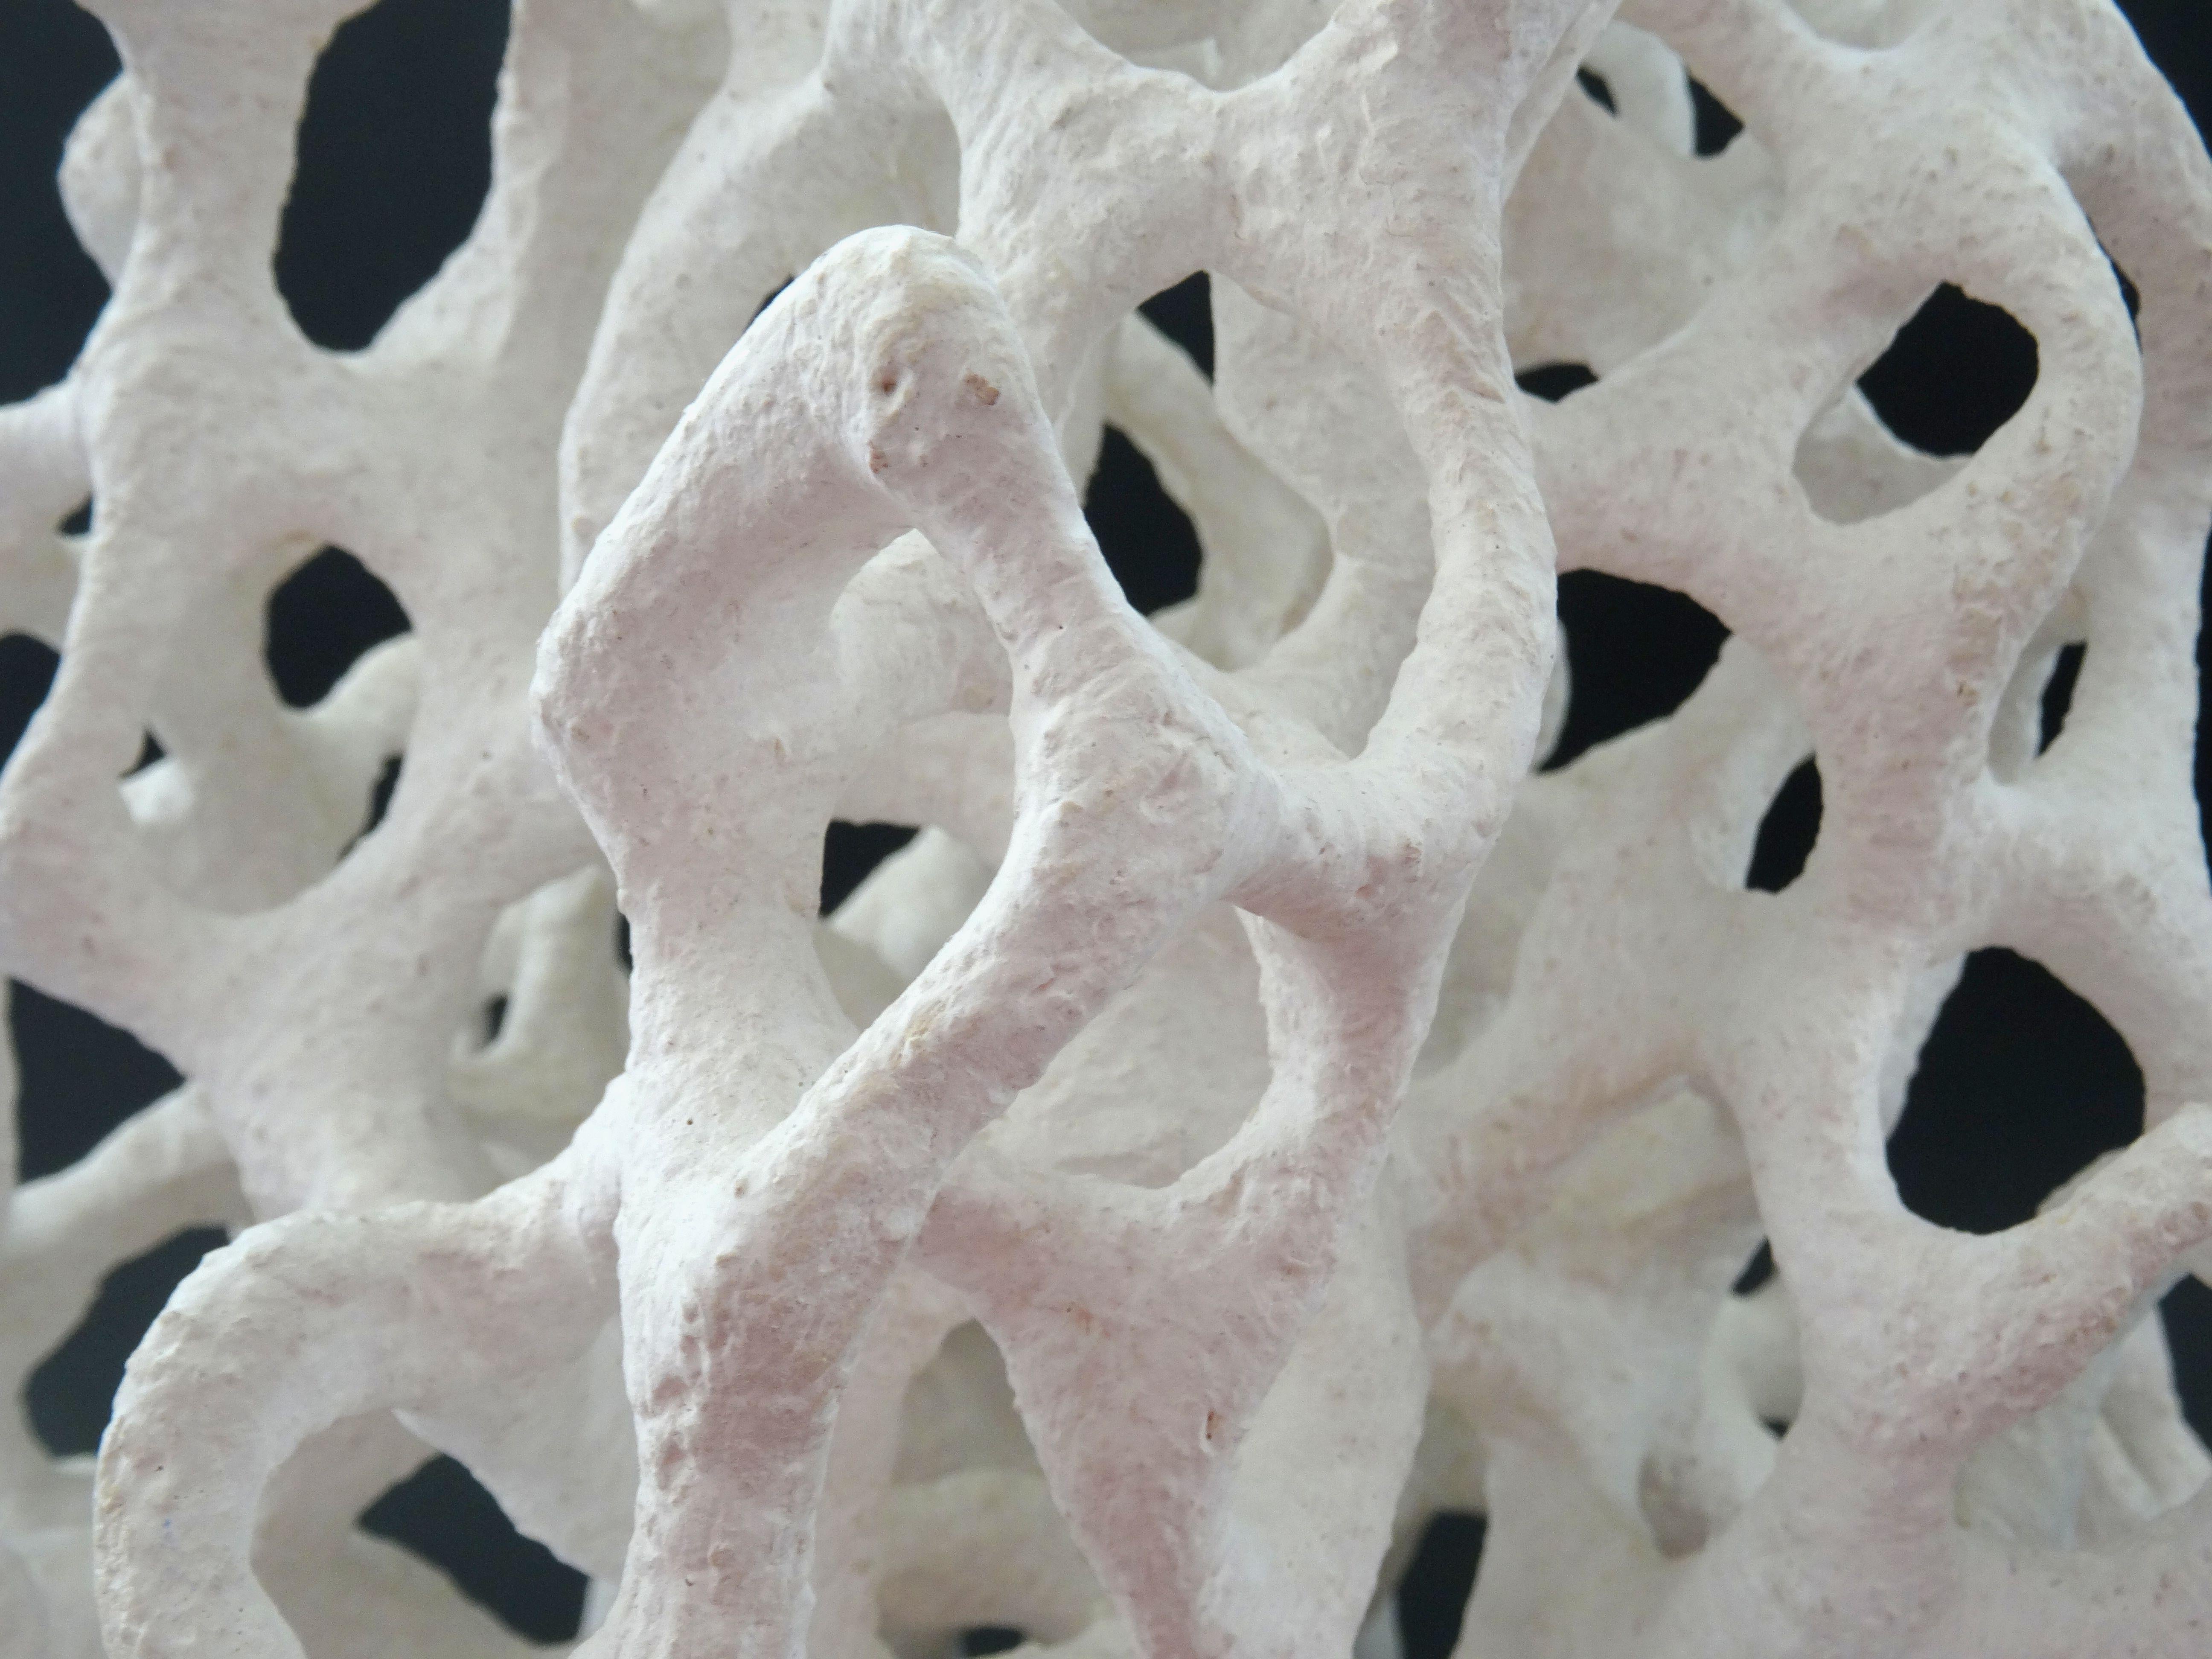 Infinity loops. Ceramics and porcelain, h 35 cm; W 27 cm; D 25 cm - Sculpture by Elina Titane 